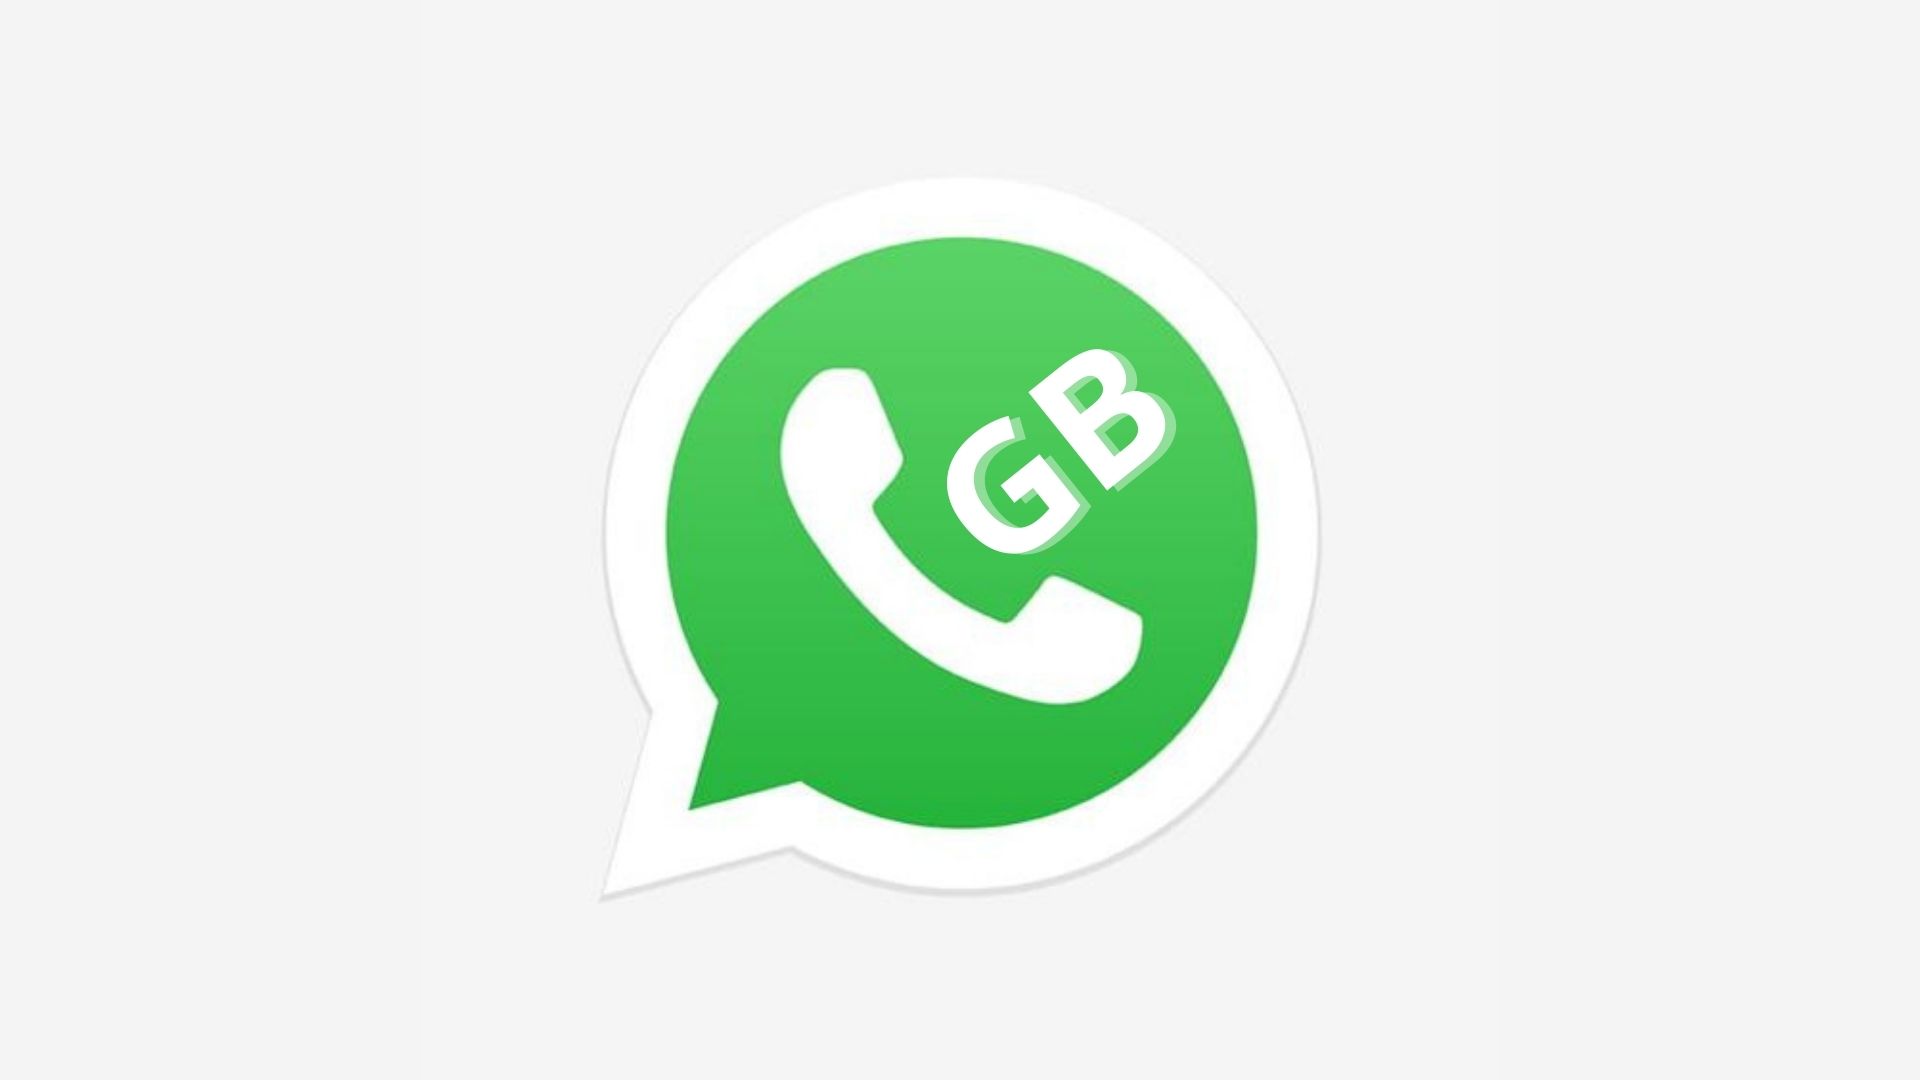 Link Download GB WhatsApp Apk v17.20 Terupdate, Nikmati Fitur Lengkap Tanpa Kedaluwarsa